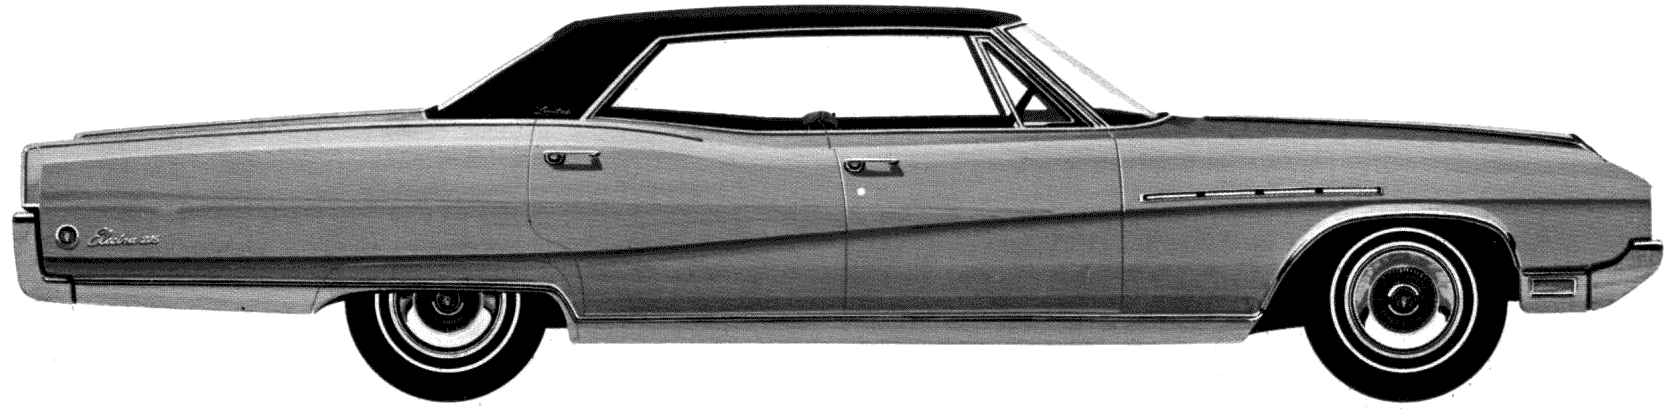 Auto Buick Electra 225 Limited 4-Door Hardtop 1968 